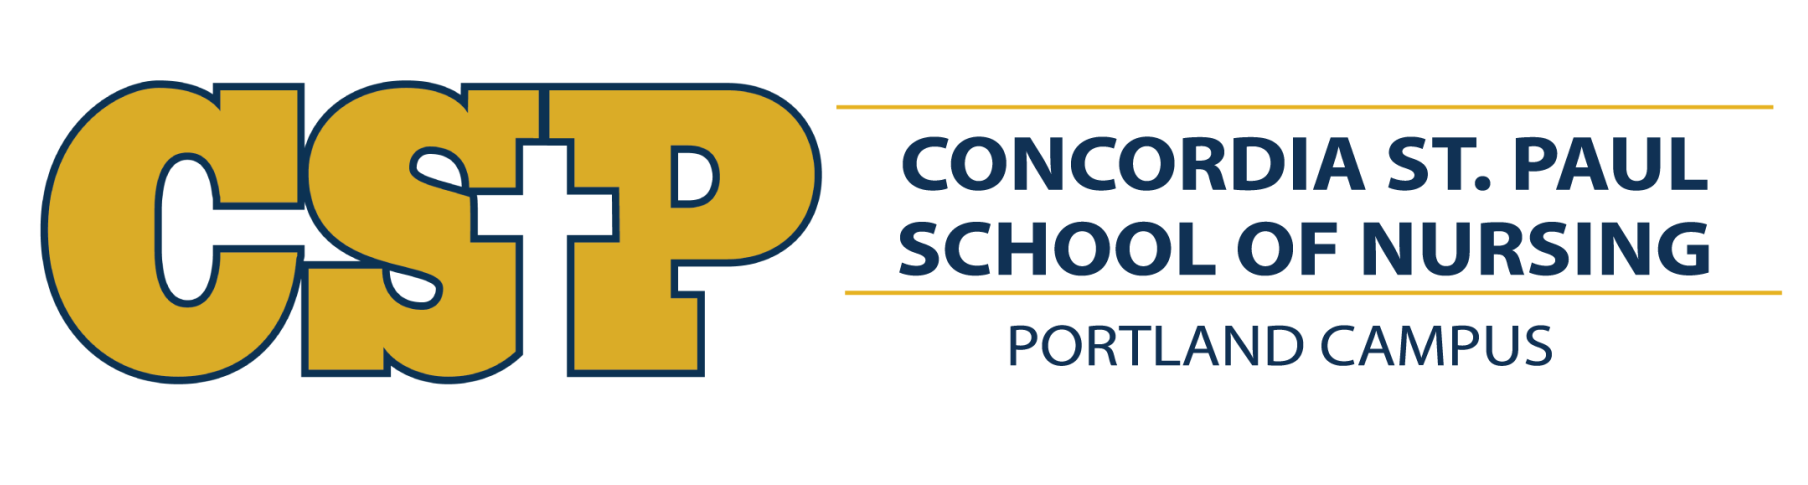 Concordia University - Portland logo